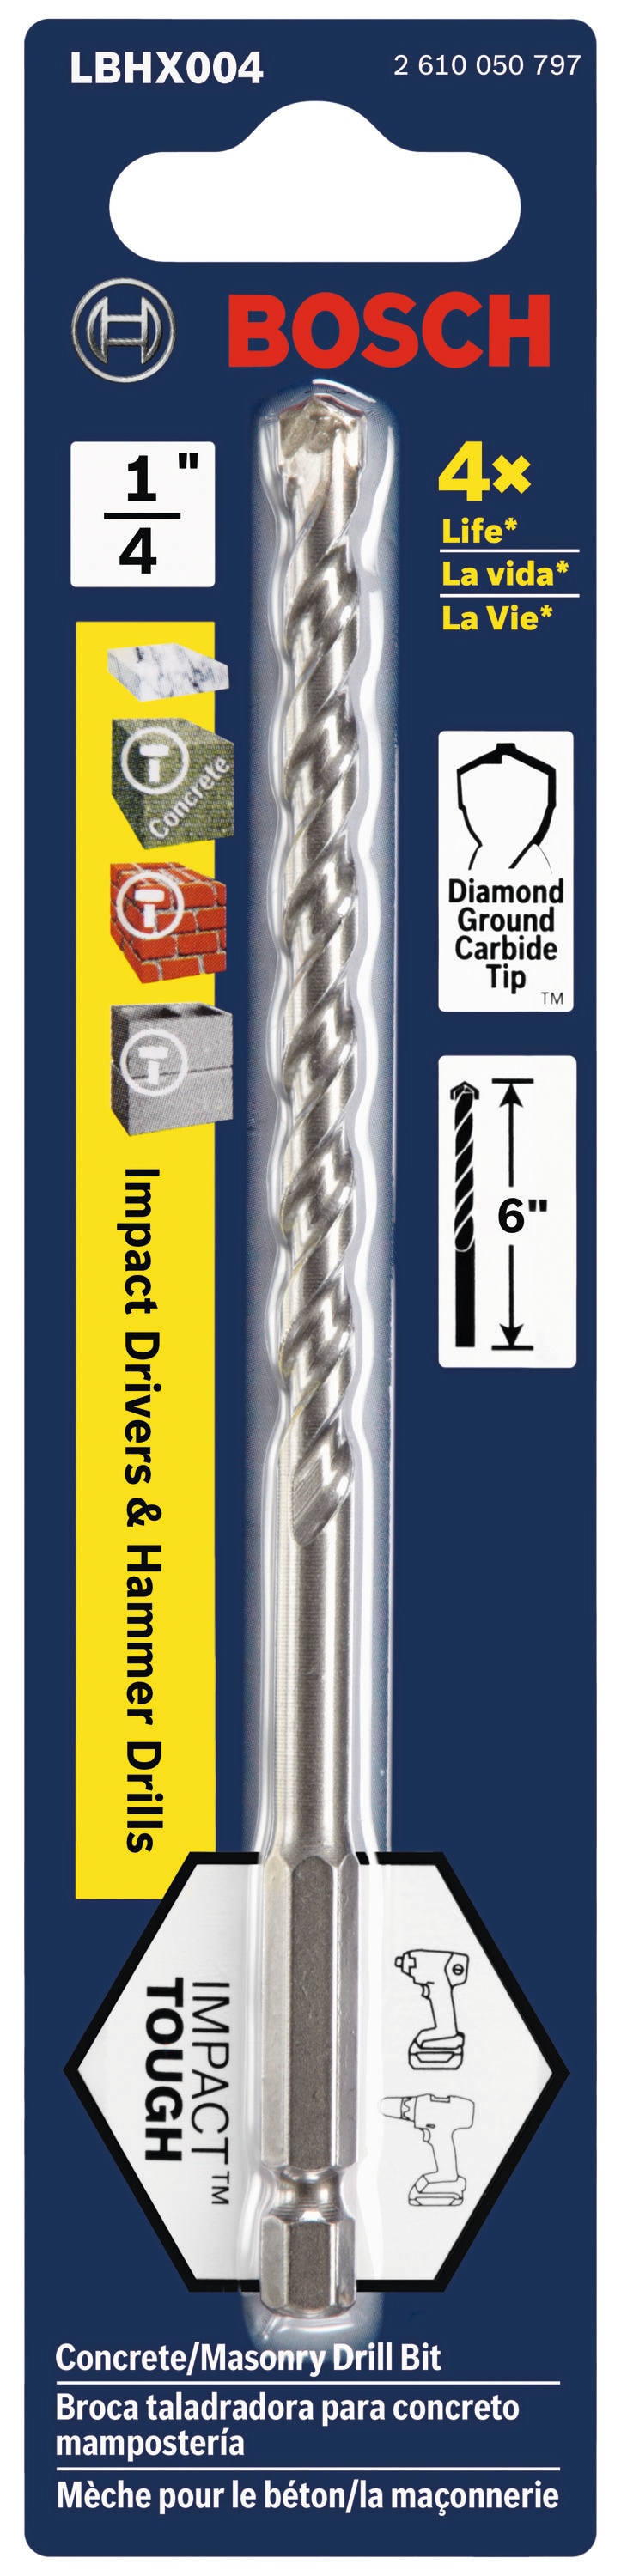 SPKLINE 5 Pcs SDS-Plus Rotary Hammer Drill Bit Set  3/16,1/4,5/16,3/8,1/2 Diameter,Tungsten Carbide Tip SDS+ Impact Drill  Bits for Concrete Brick